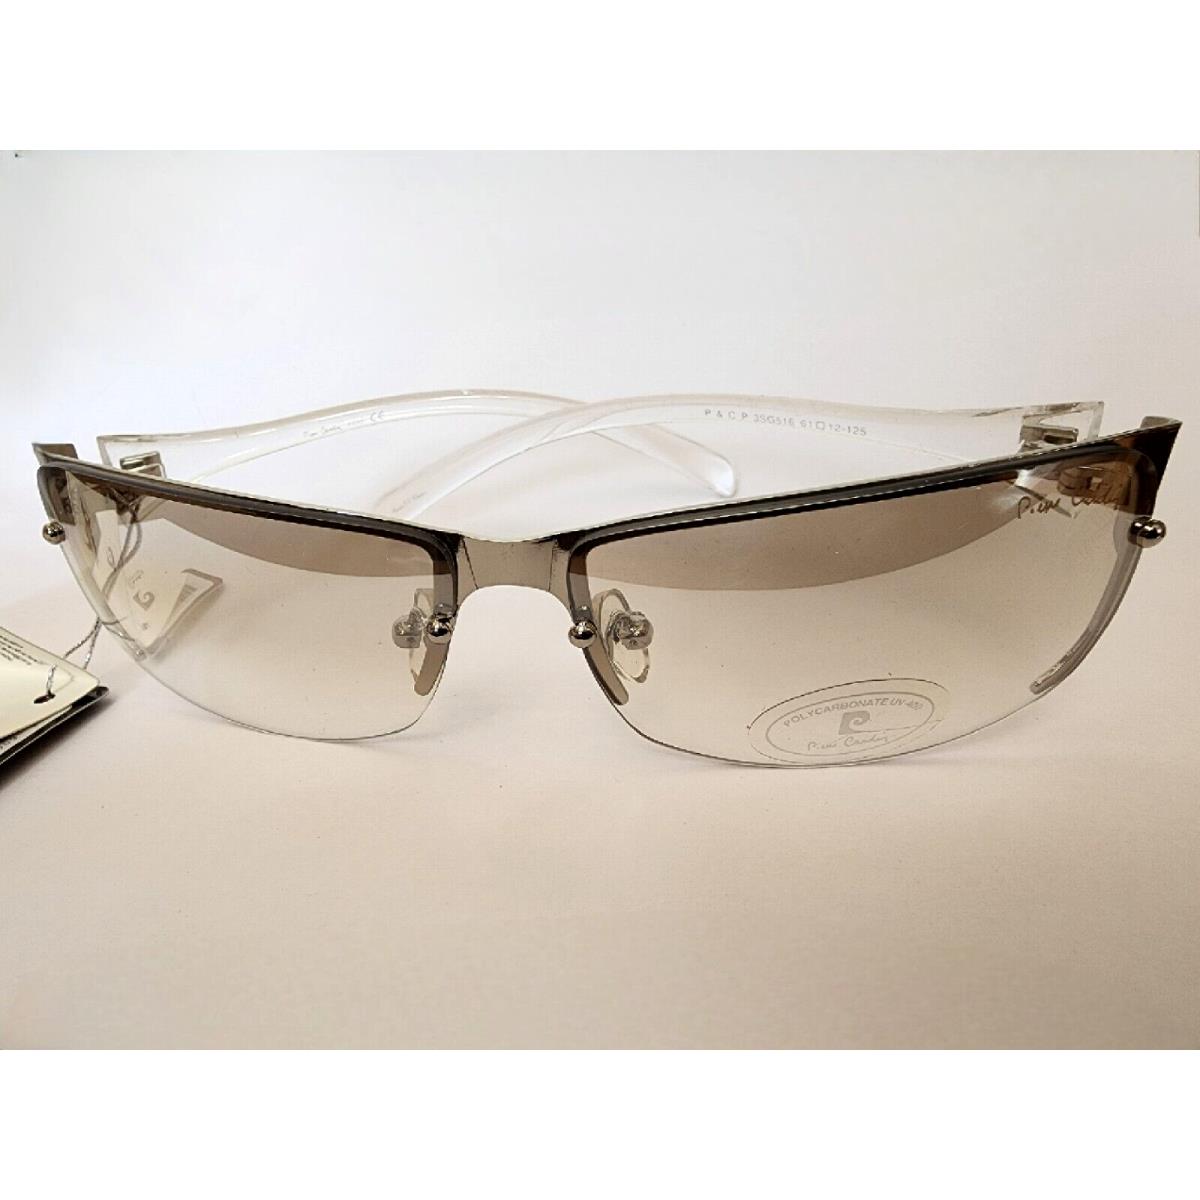 Pierre Cardin Paris Fashion Sunglasses Polycarbonate UV400 Silver Reflective